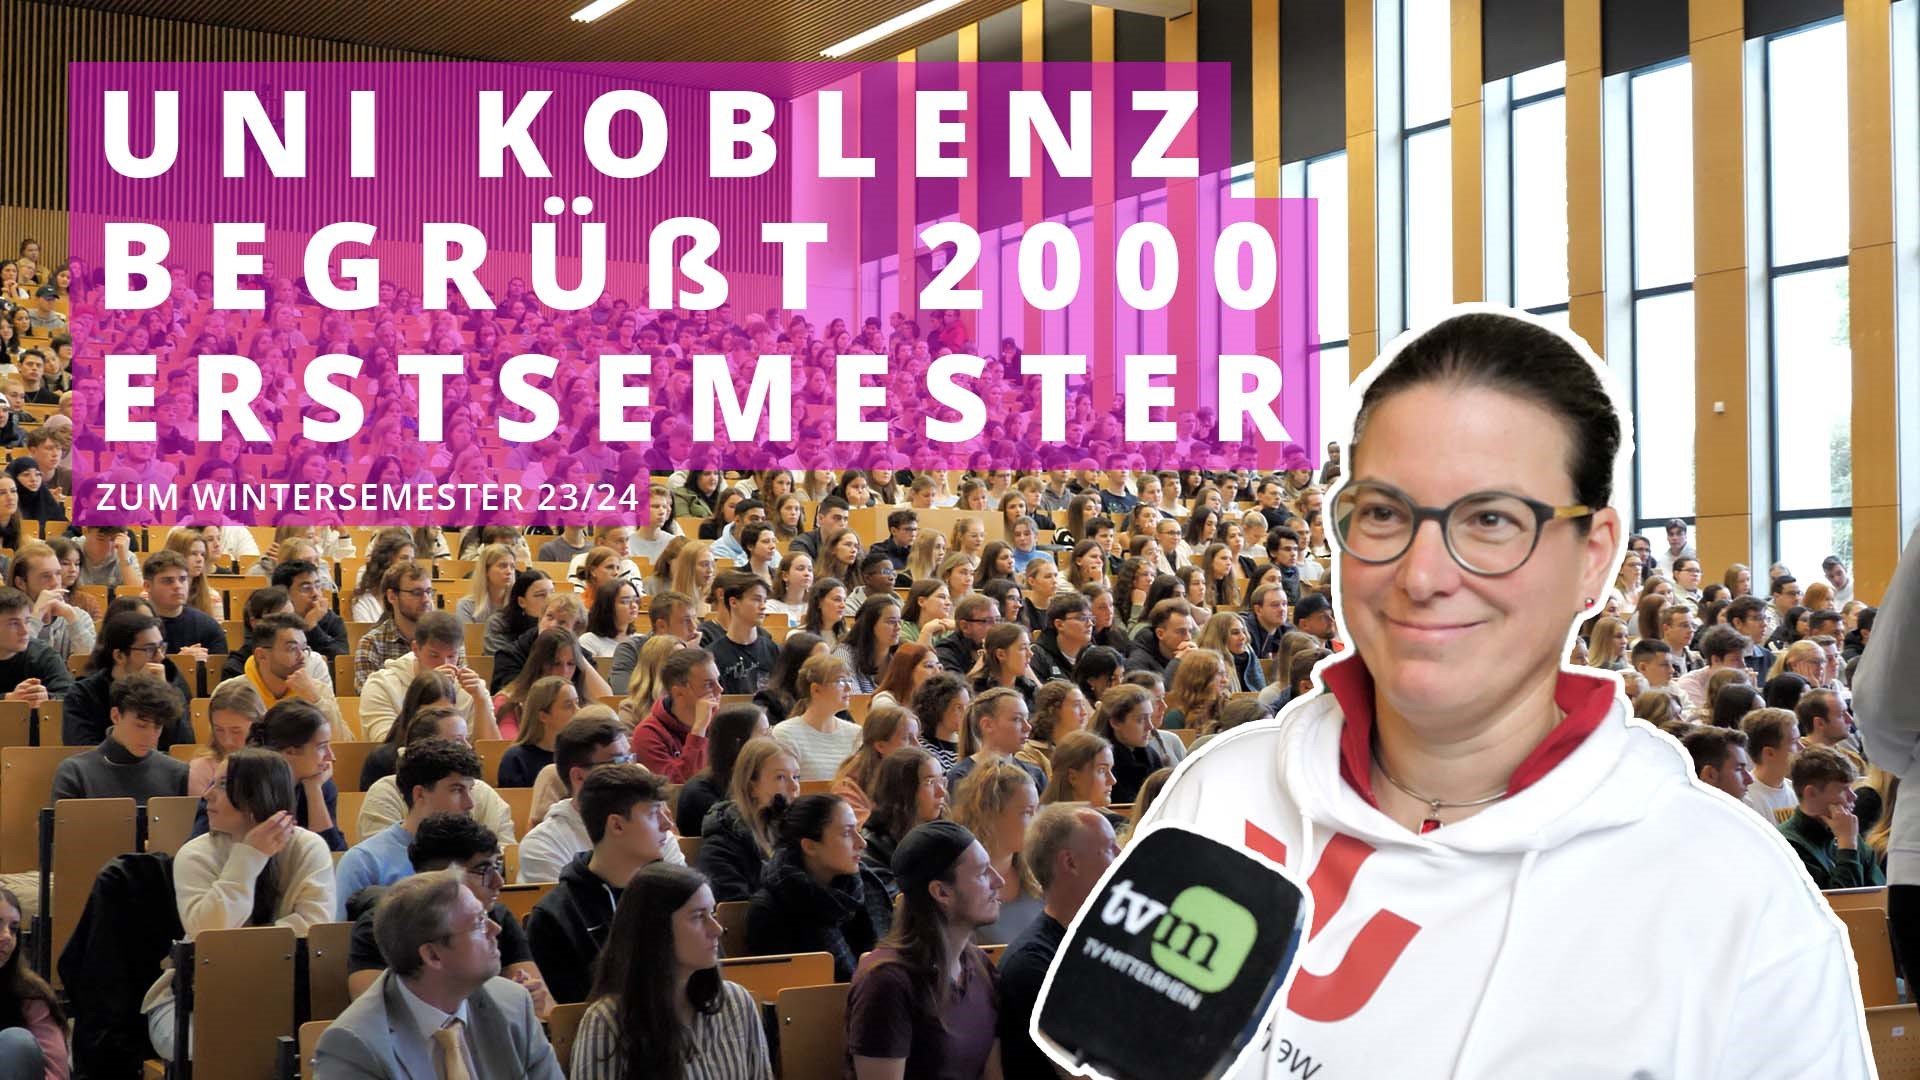 Universität Koblenz begrüßt über 2000 Erstsemester